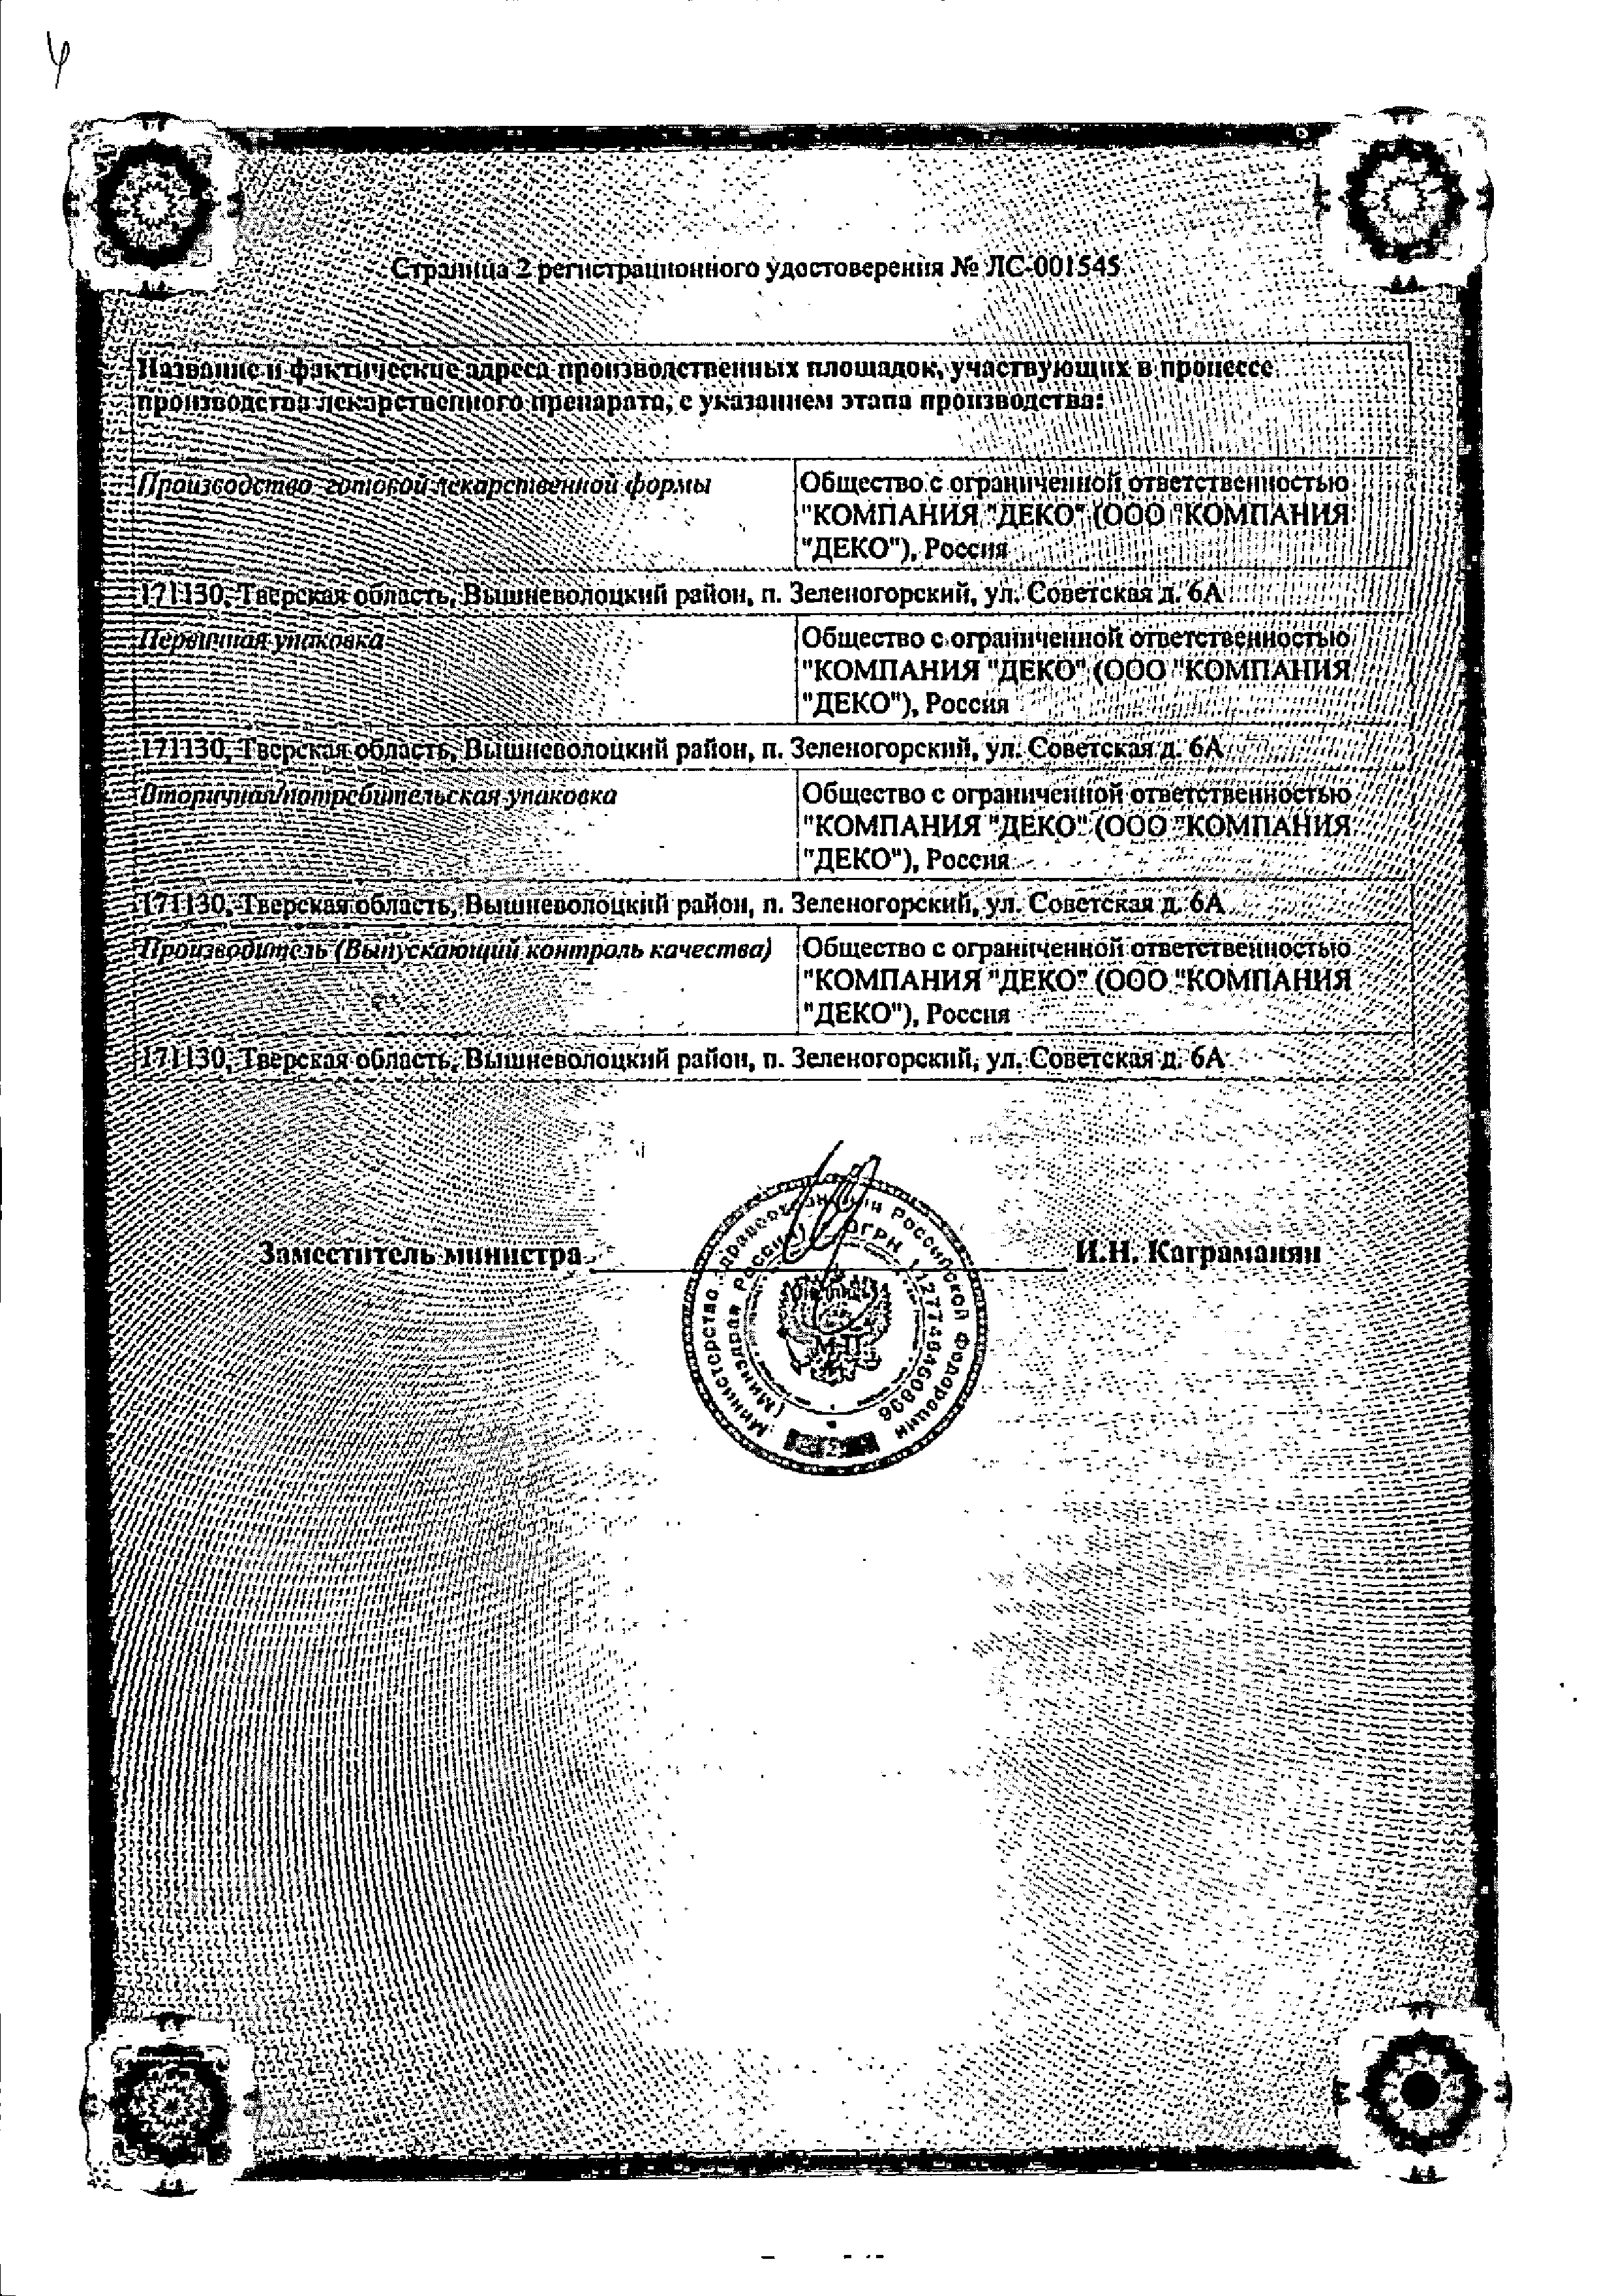 Кокарбоксилаза сертификат